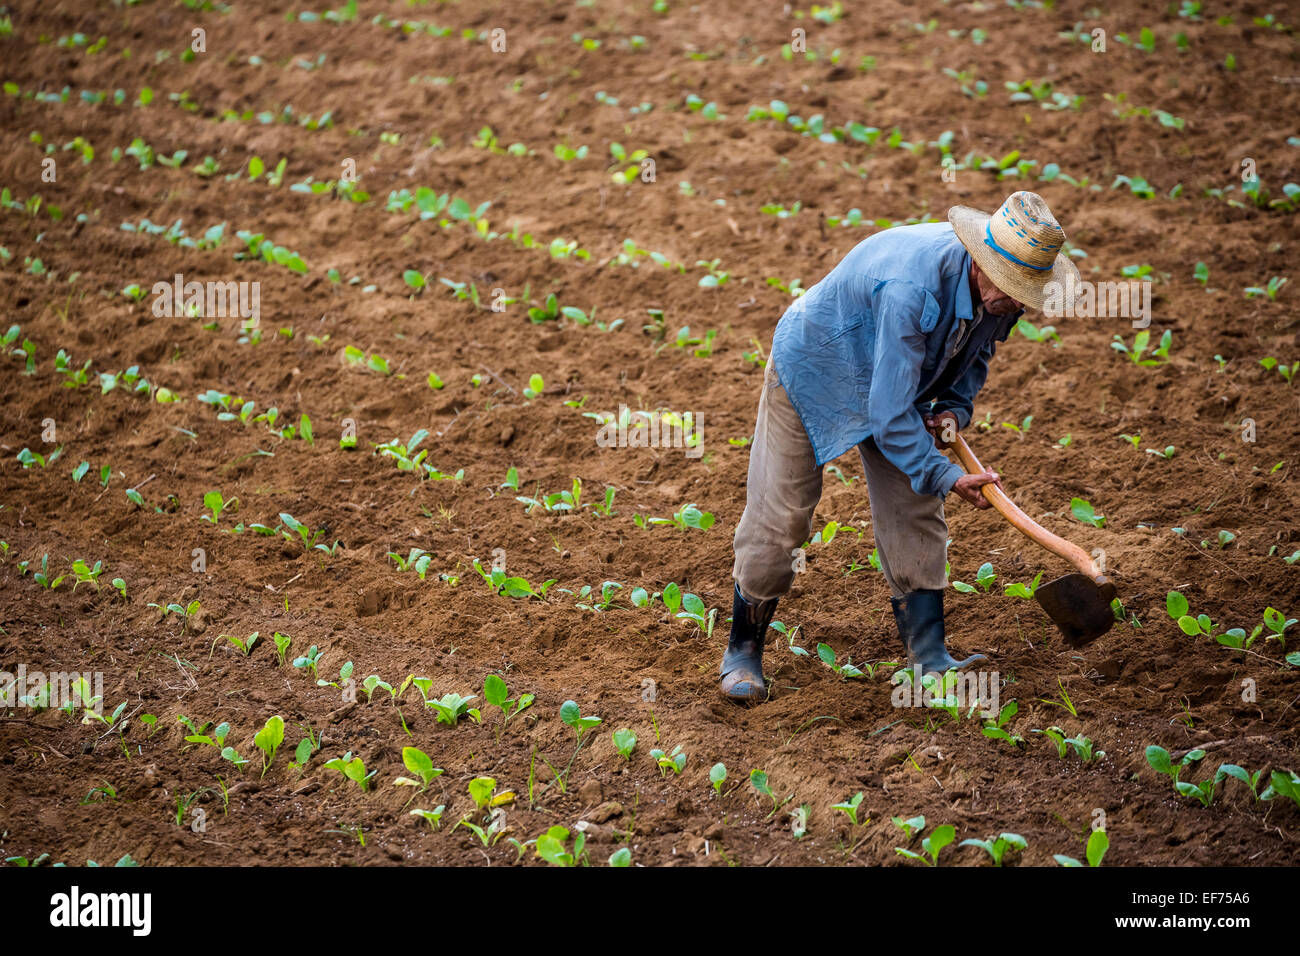 Agriculteur cultiver son champ de tabac dans la Vallée de Viñales, province de Pinar del Rio, Cuba Banque D'Images